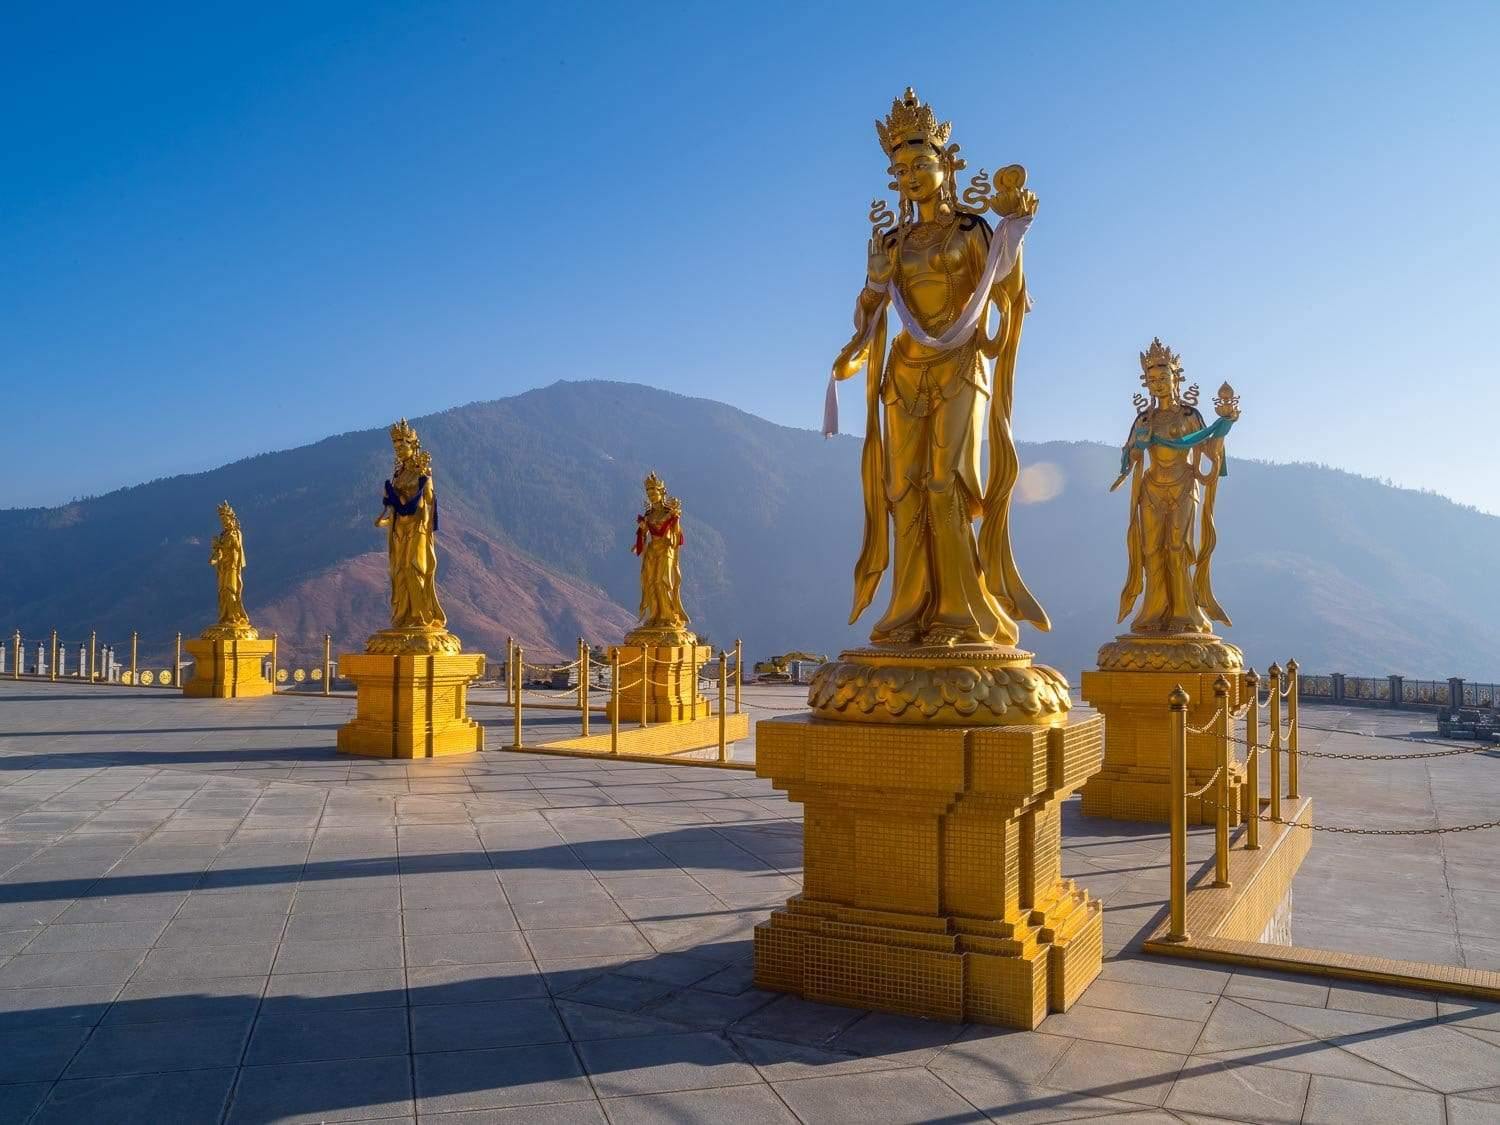 Group of golden standing statues, Golden Statues